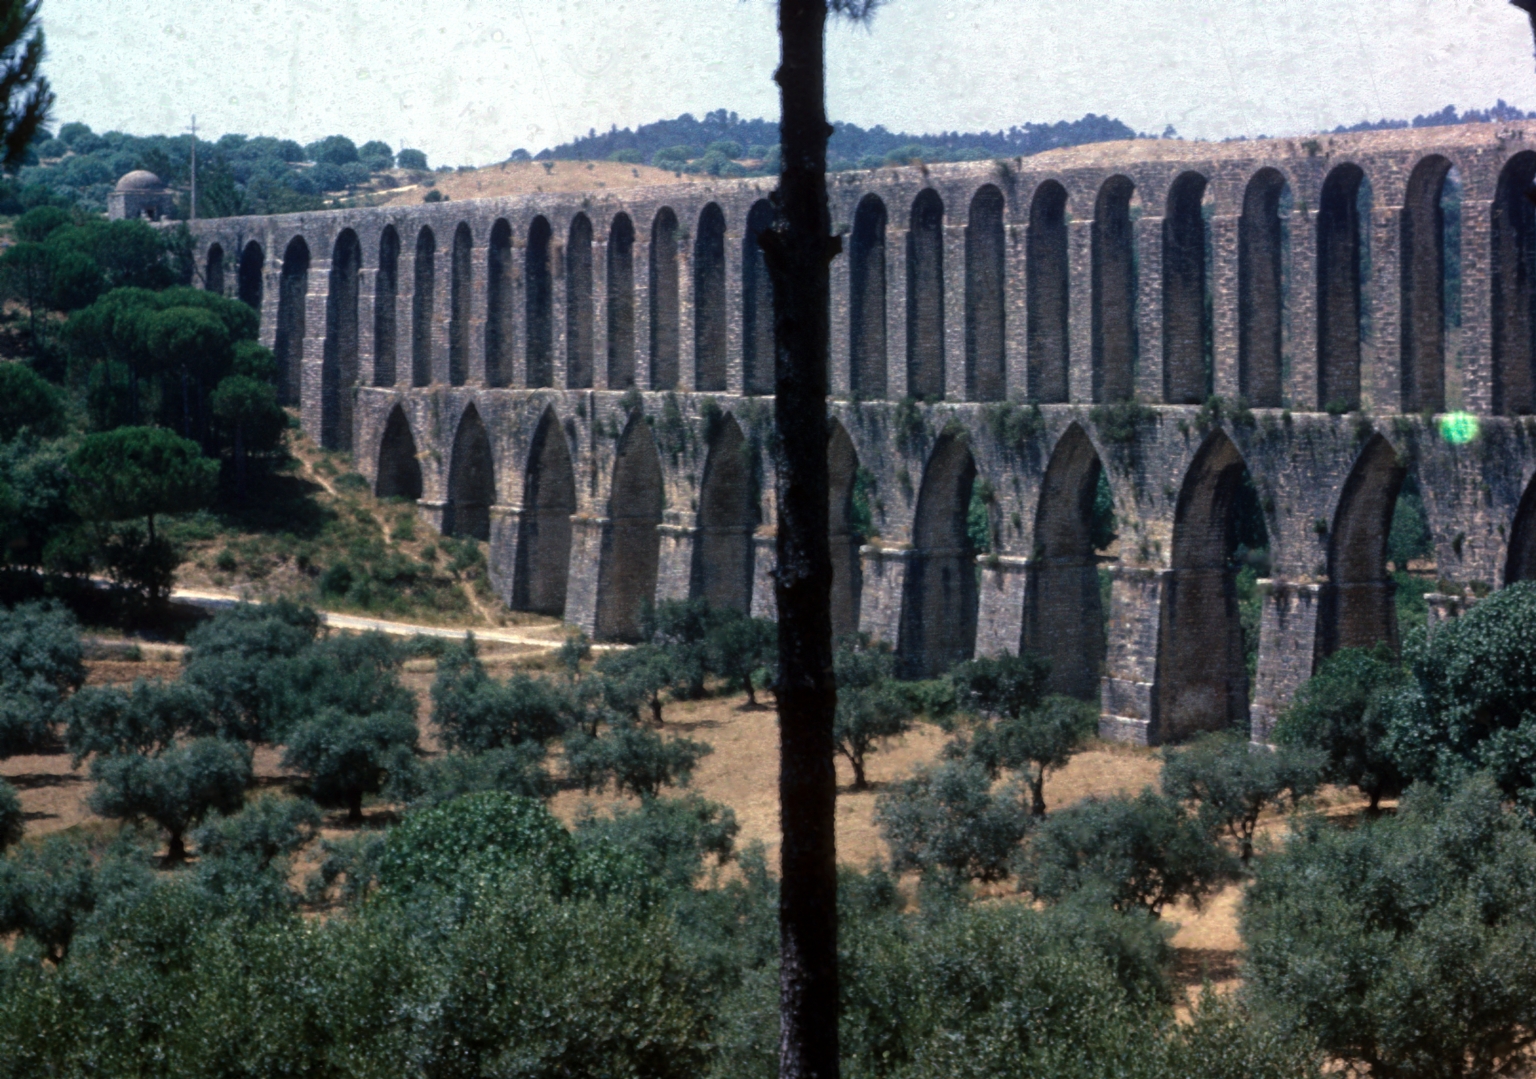 Aqueduct of Pegões